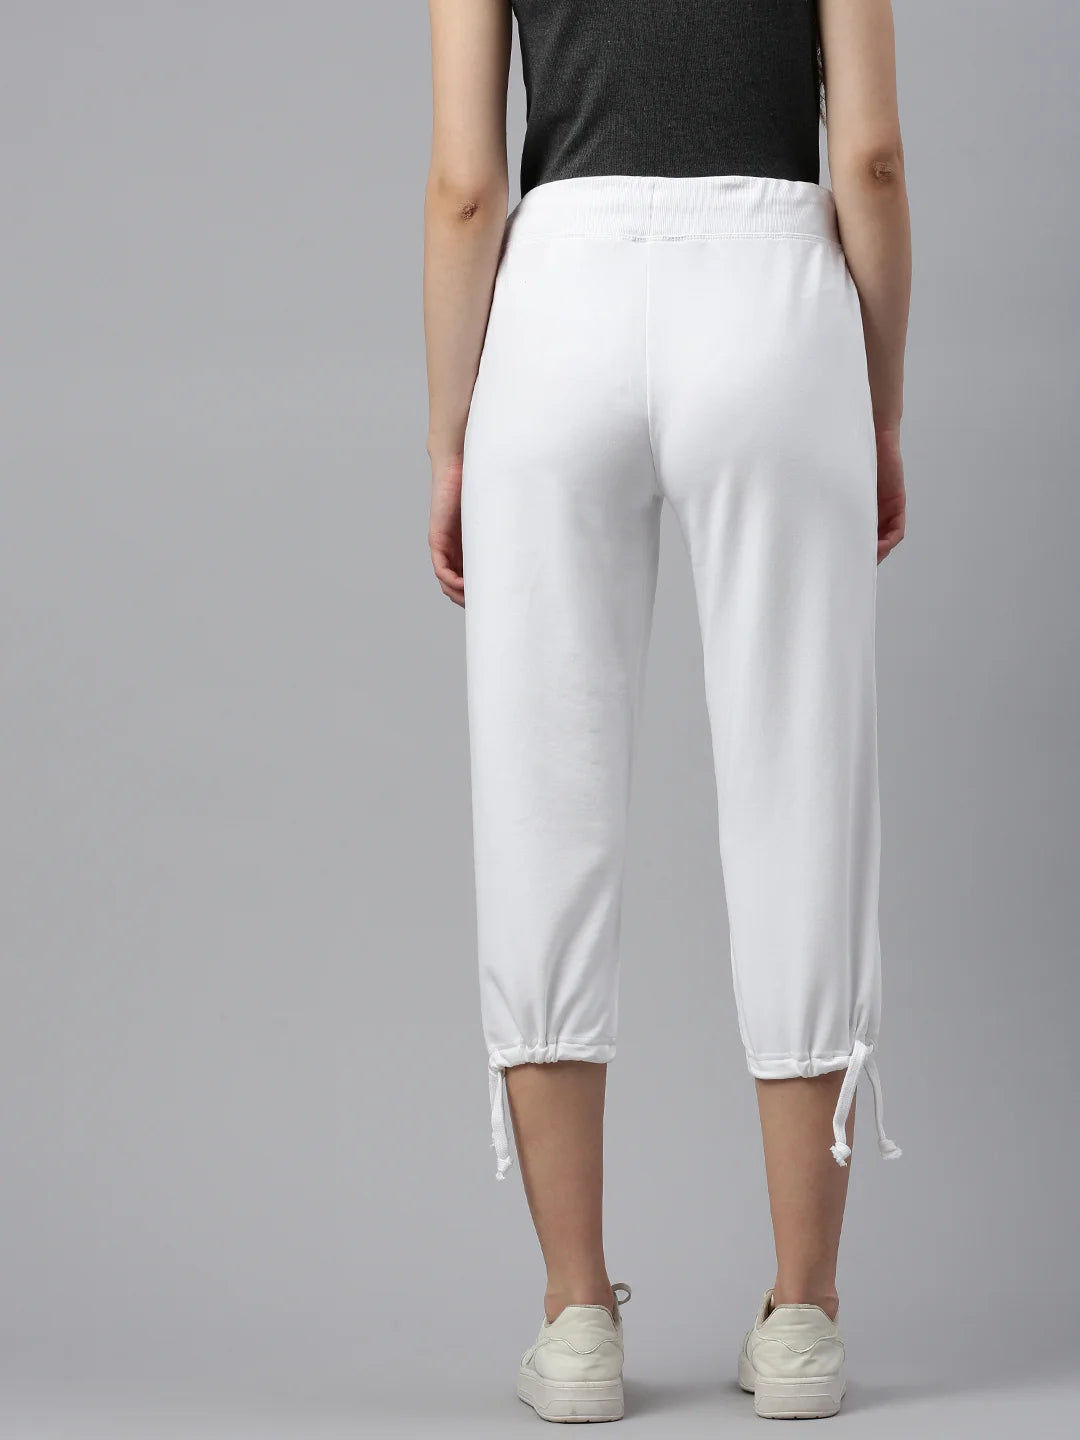 femme-conny-coton-bio-34-pantalon-blanc-back